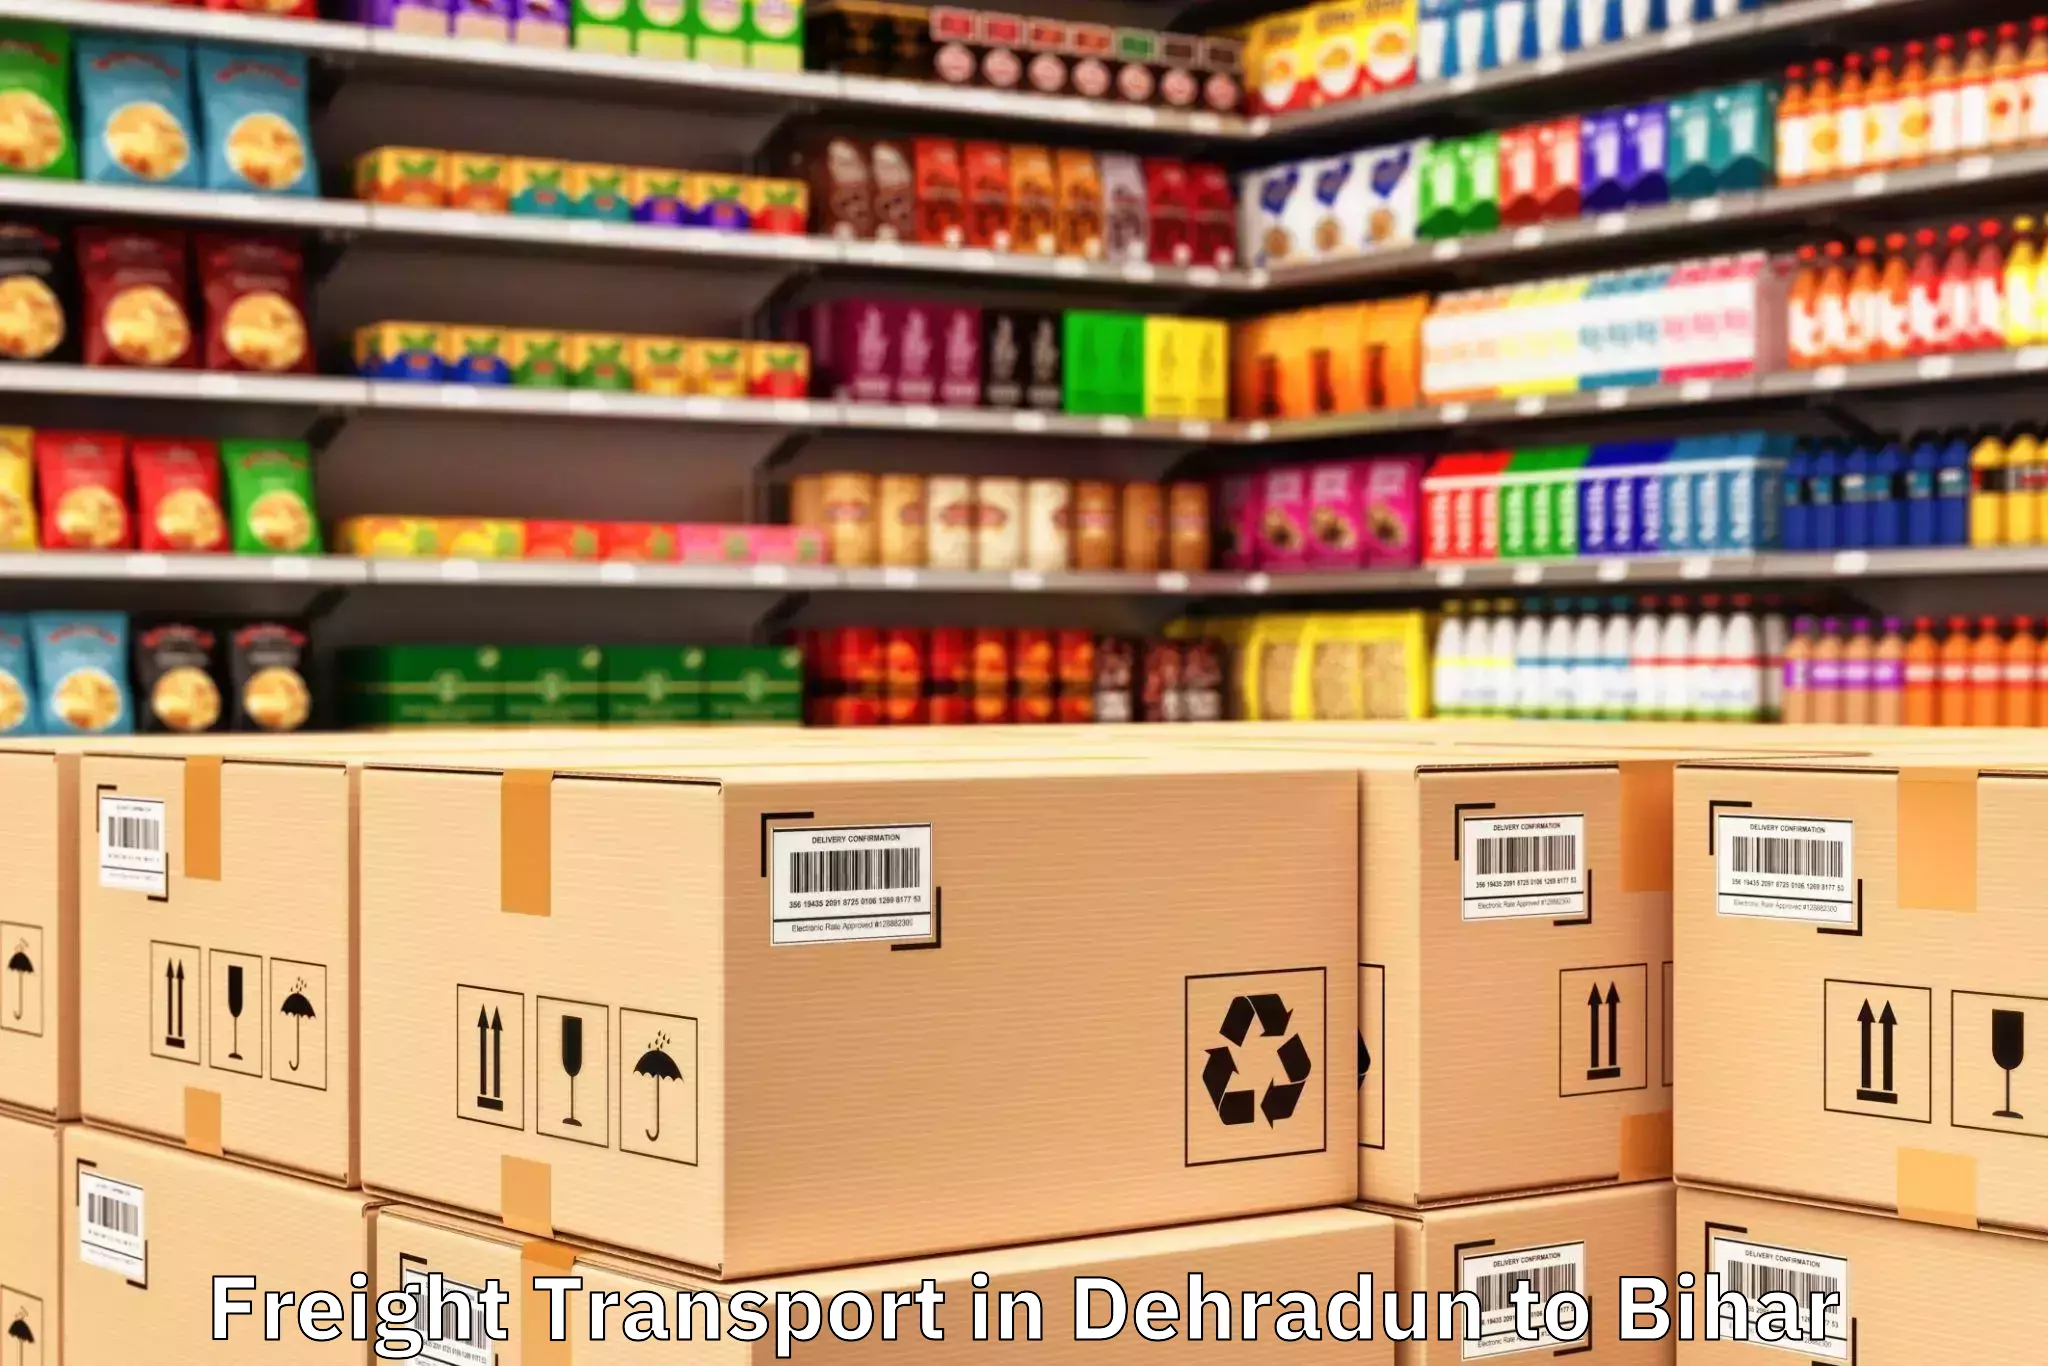 Dehradun to Bhindas Freight Transport